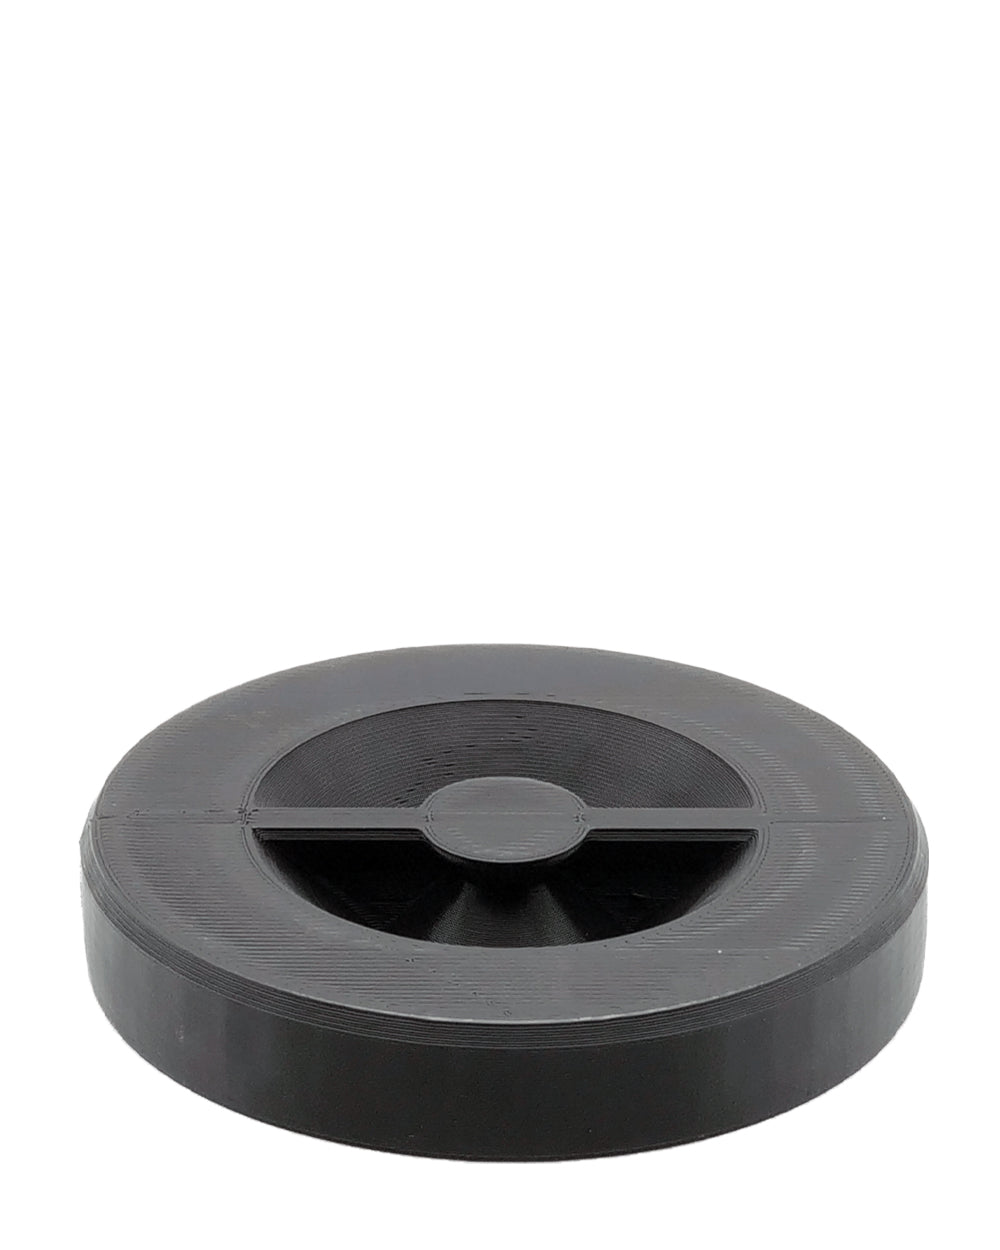 HUMBOLDT | Black Pre-Rolled Cones Filling Machine Cartridge 98mm | Fill 121 Cones Per Run - 3